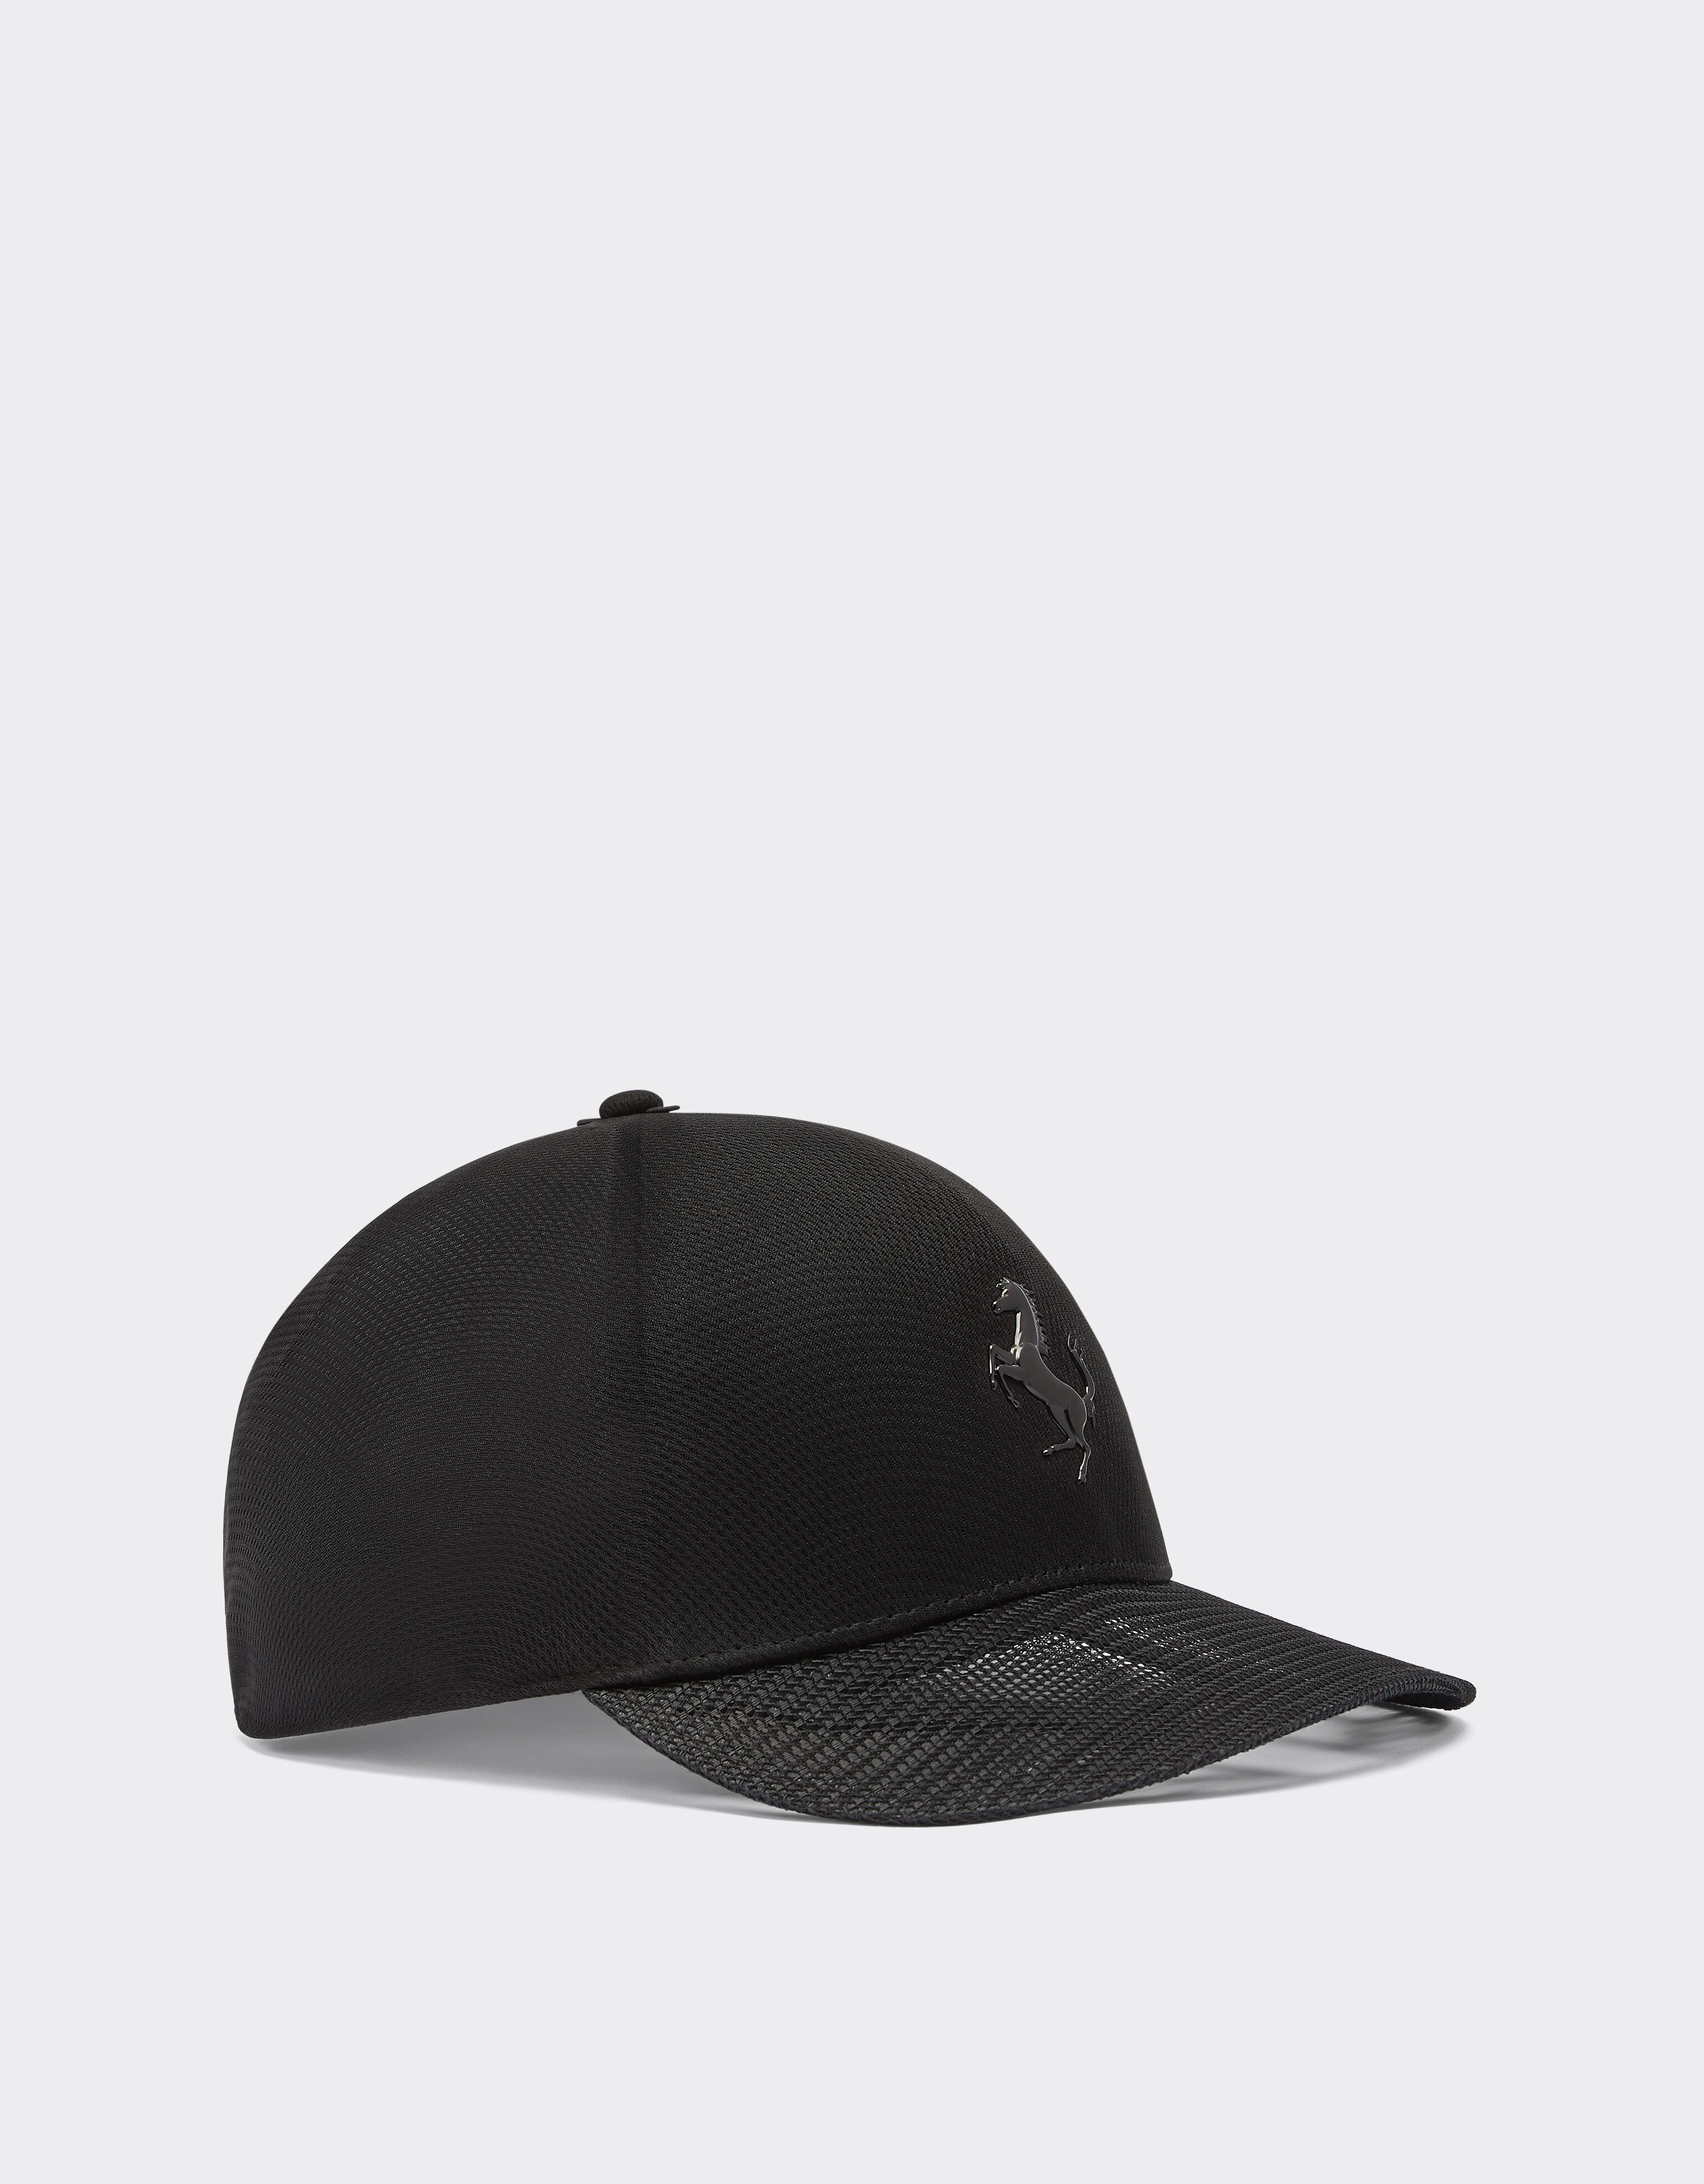 Ferrari Baseball hat with transparent visor Black 20556f